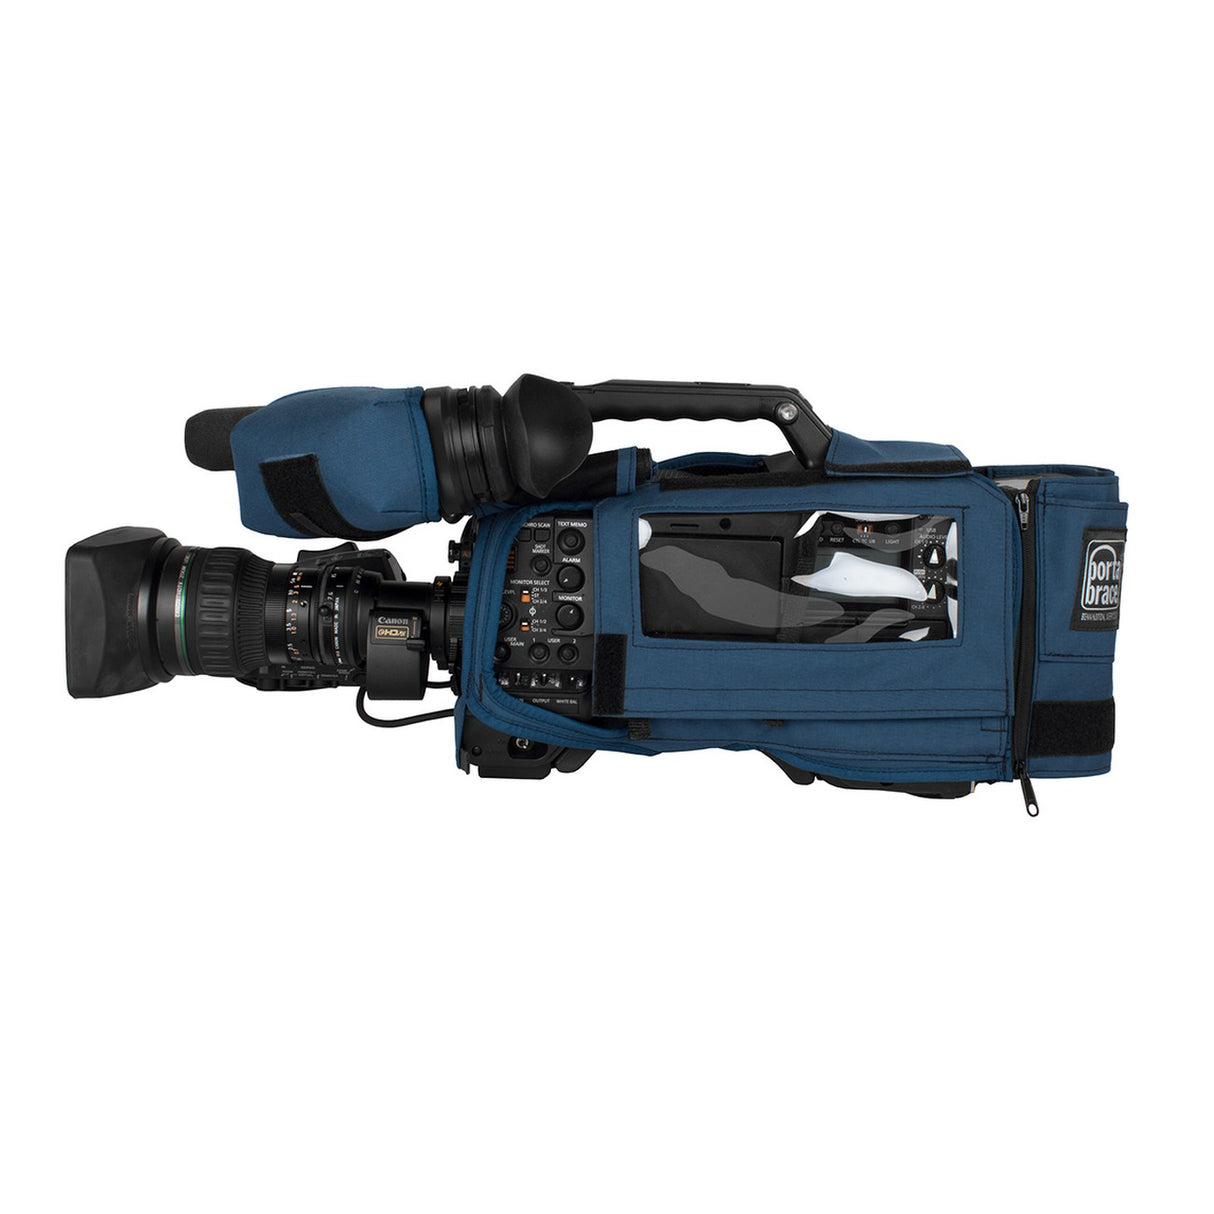 PortaBrace CBA-PX5100 Camera Body Armor Case for Panasonic PX5100, Blue